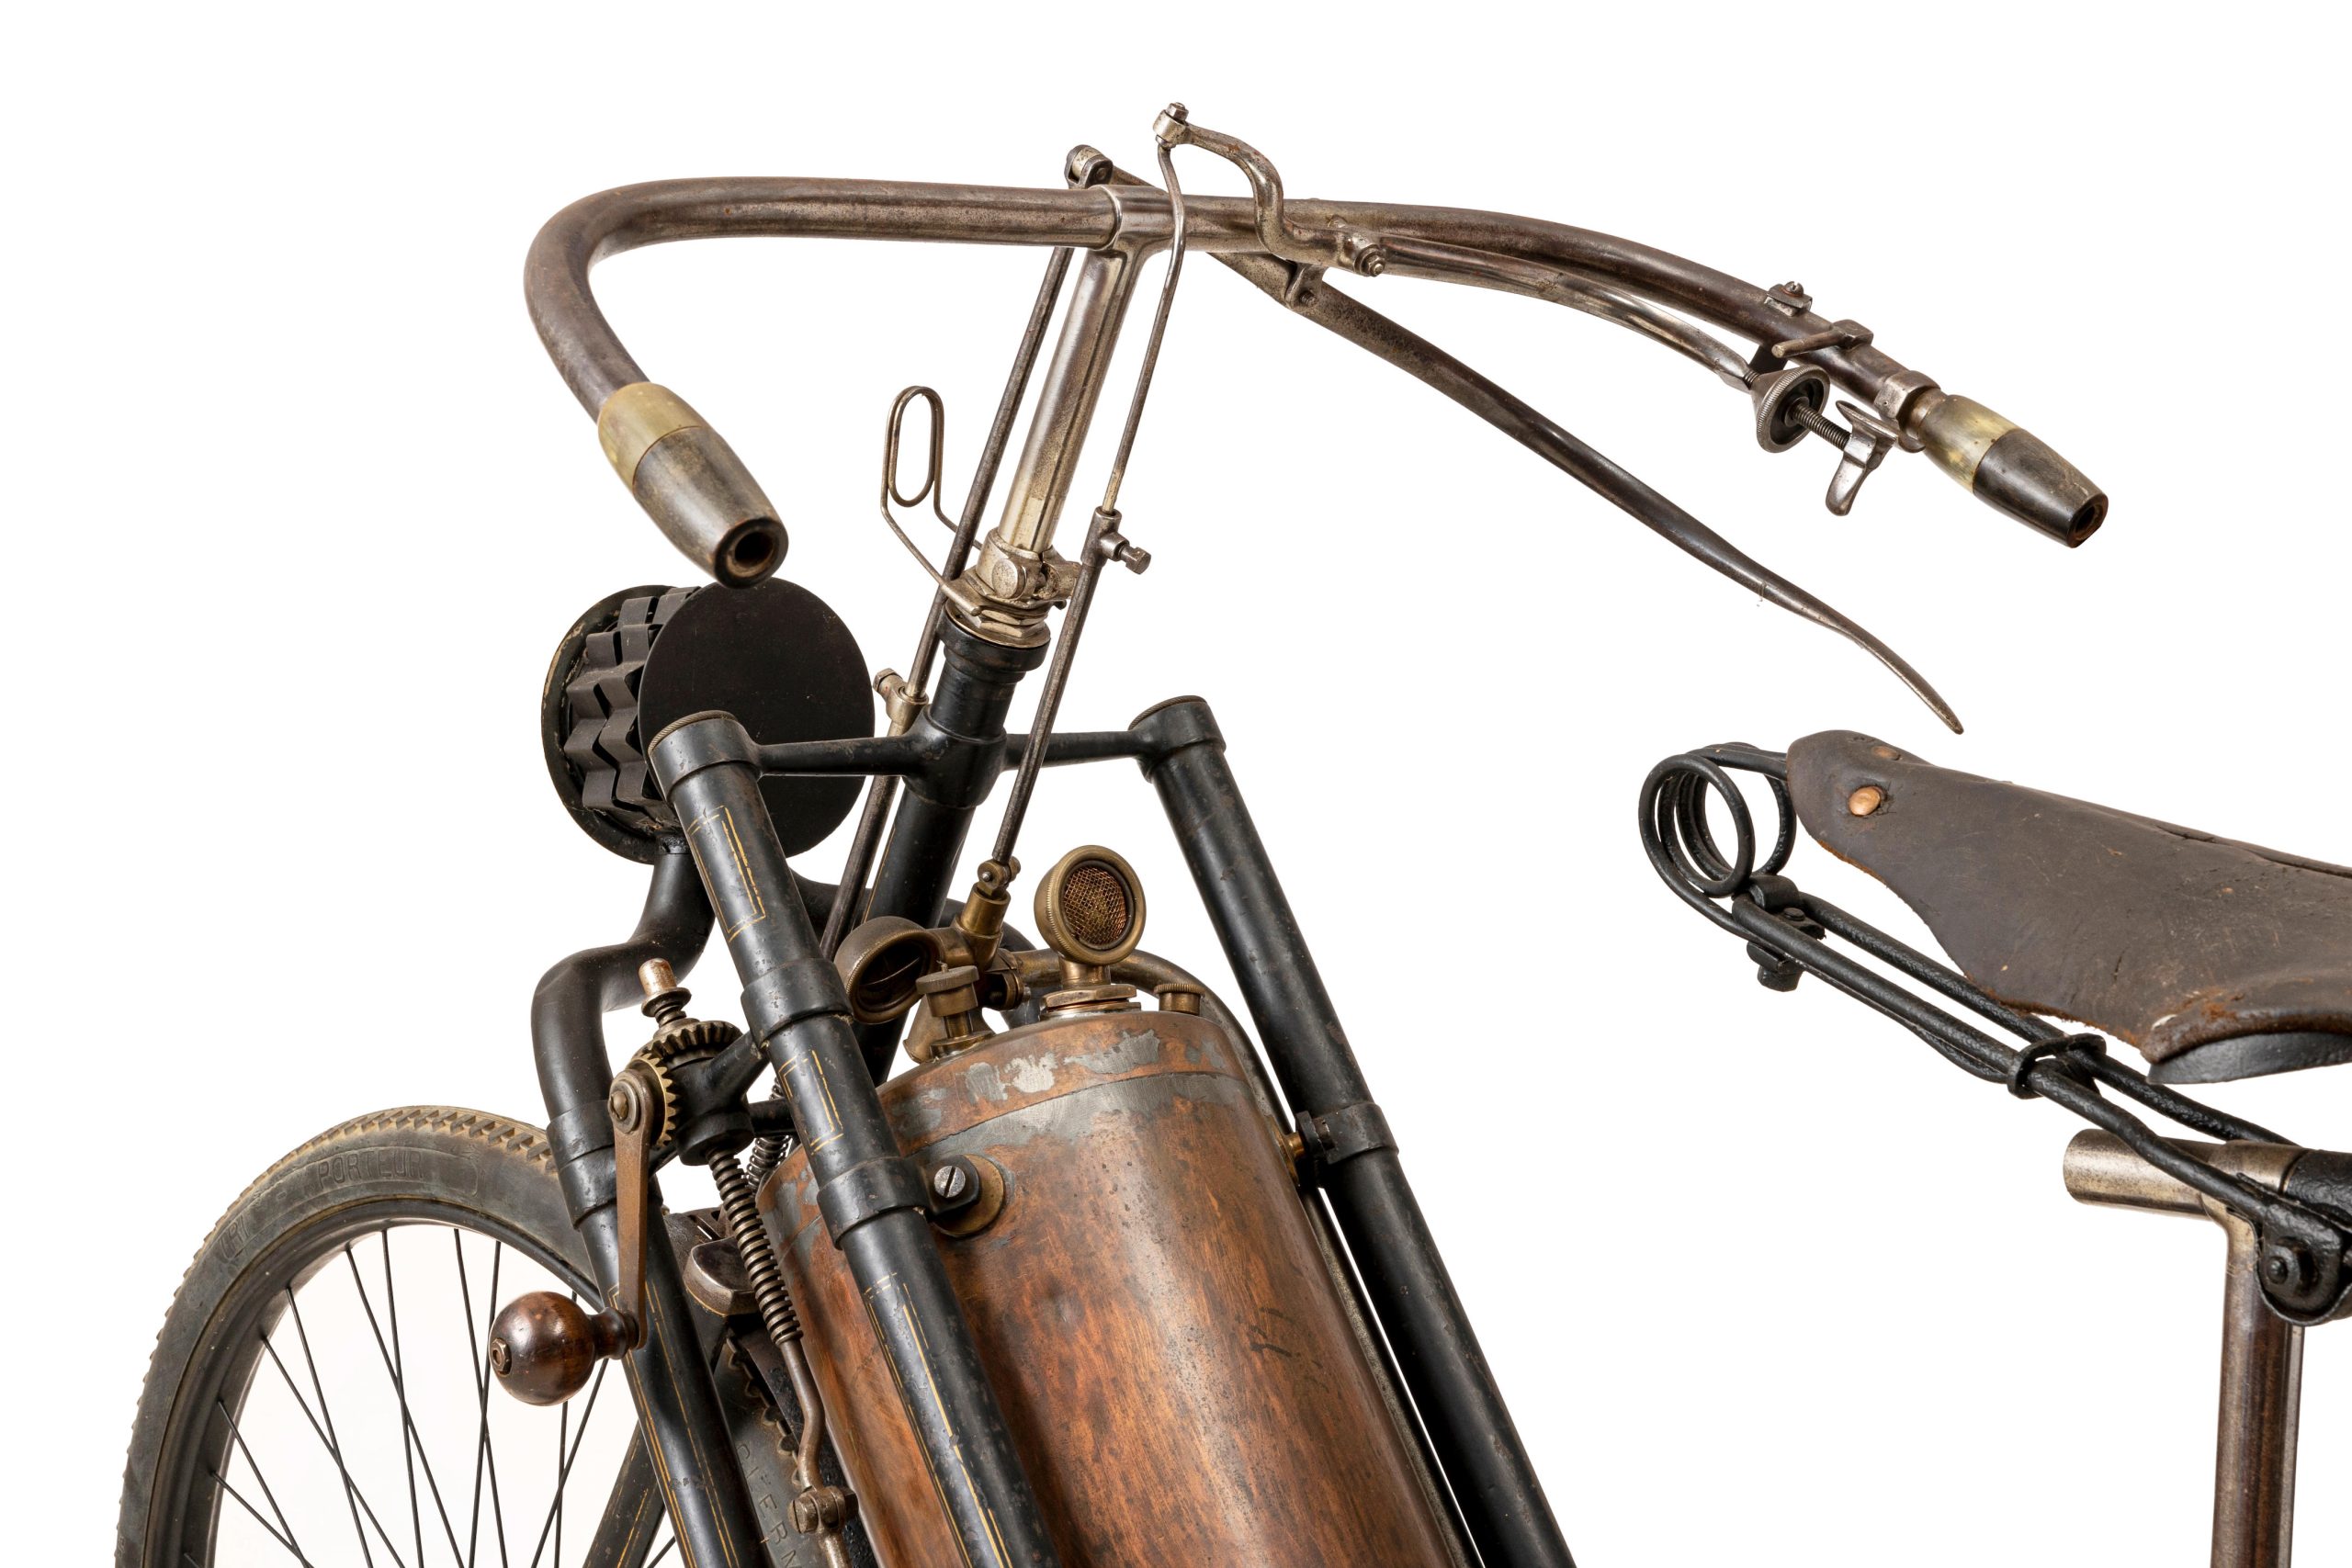 1894 Hildebrand & Wolfmüller is world's oldest motorcycle